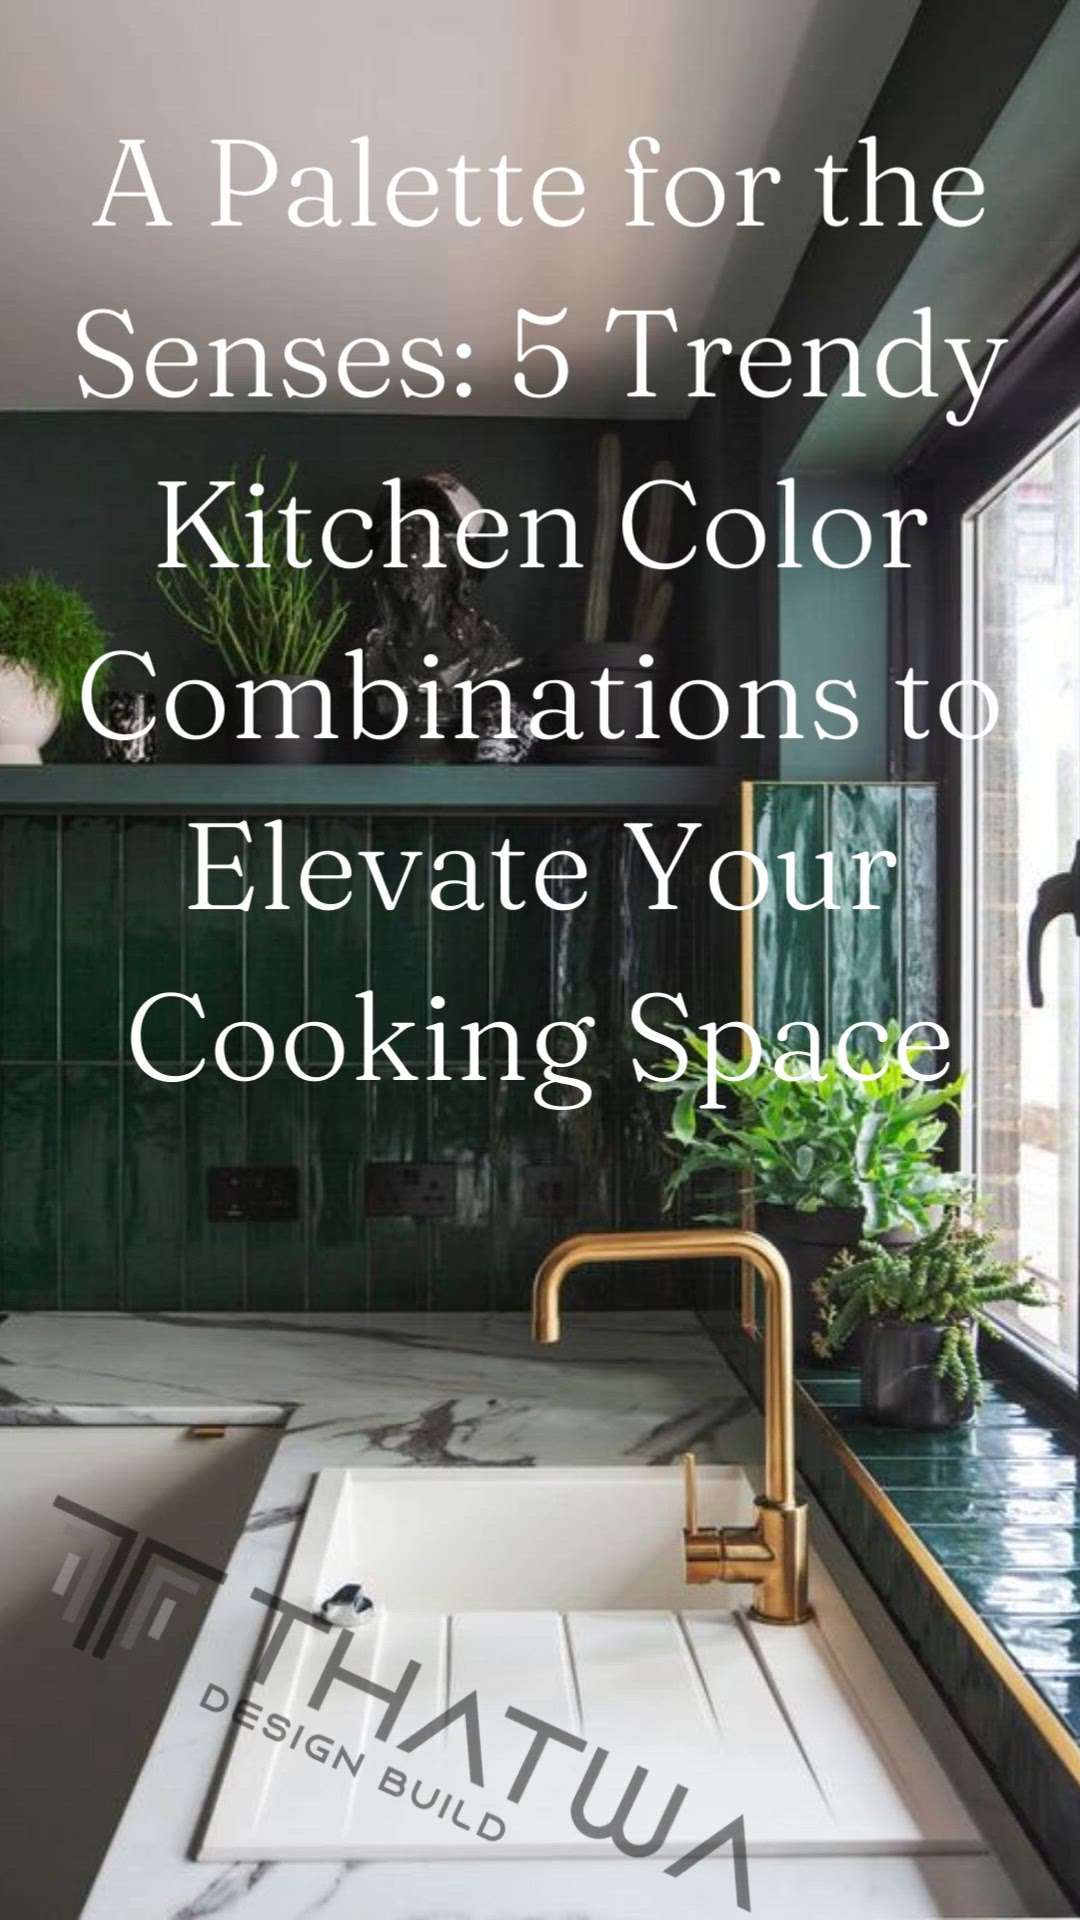 #KitchenIdeas  #KitchenCabinet  # #ModularKitchen  #kitchencounter  #KitchenInterior  #Architectural&Interior  #InteriorDesigner  #architecturedesigns